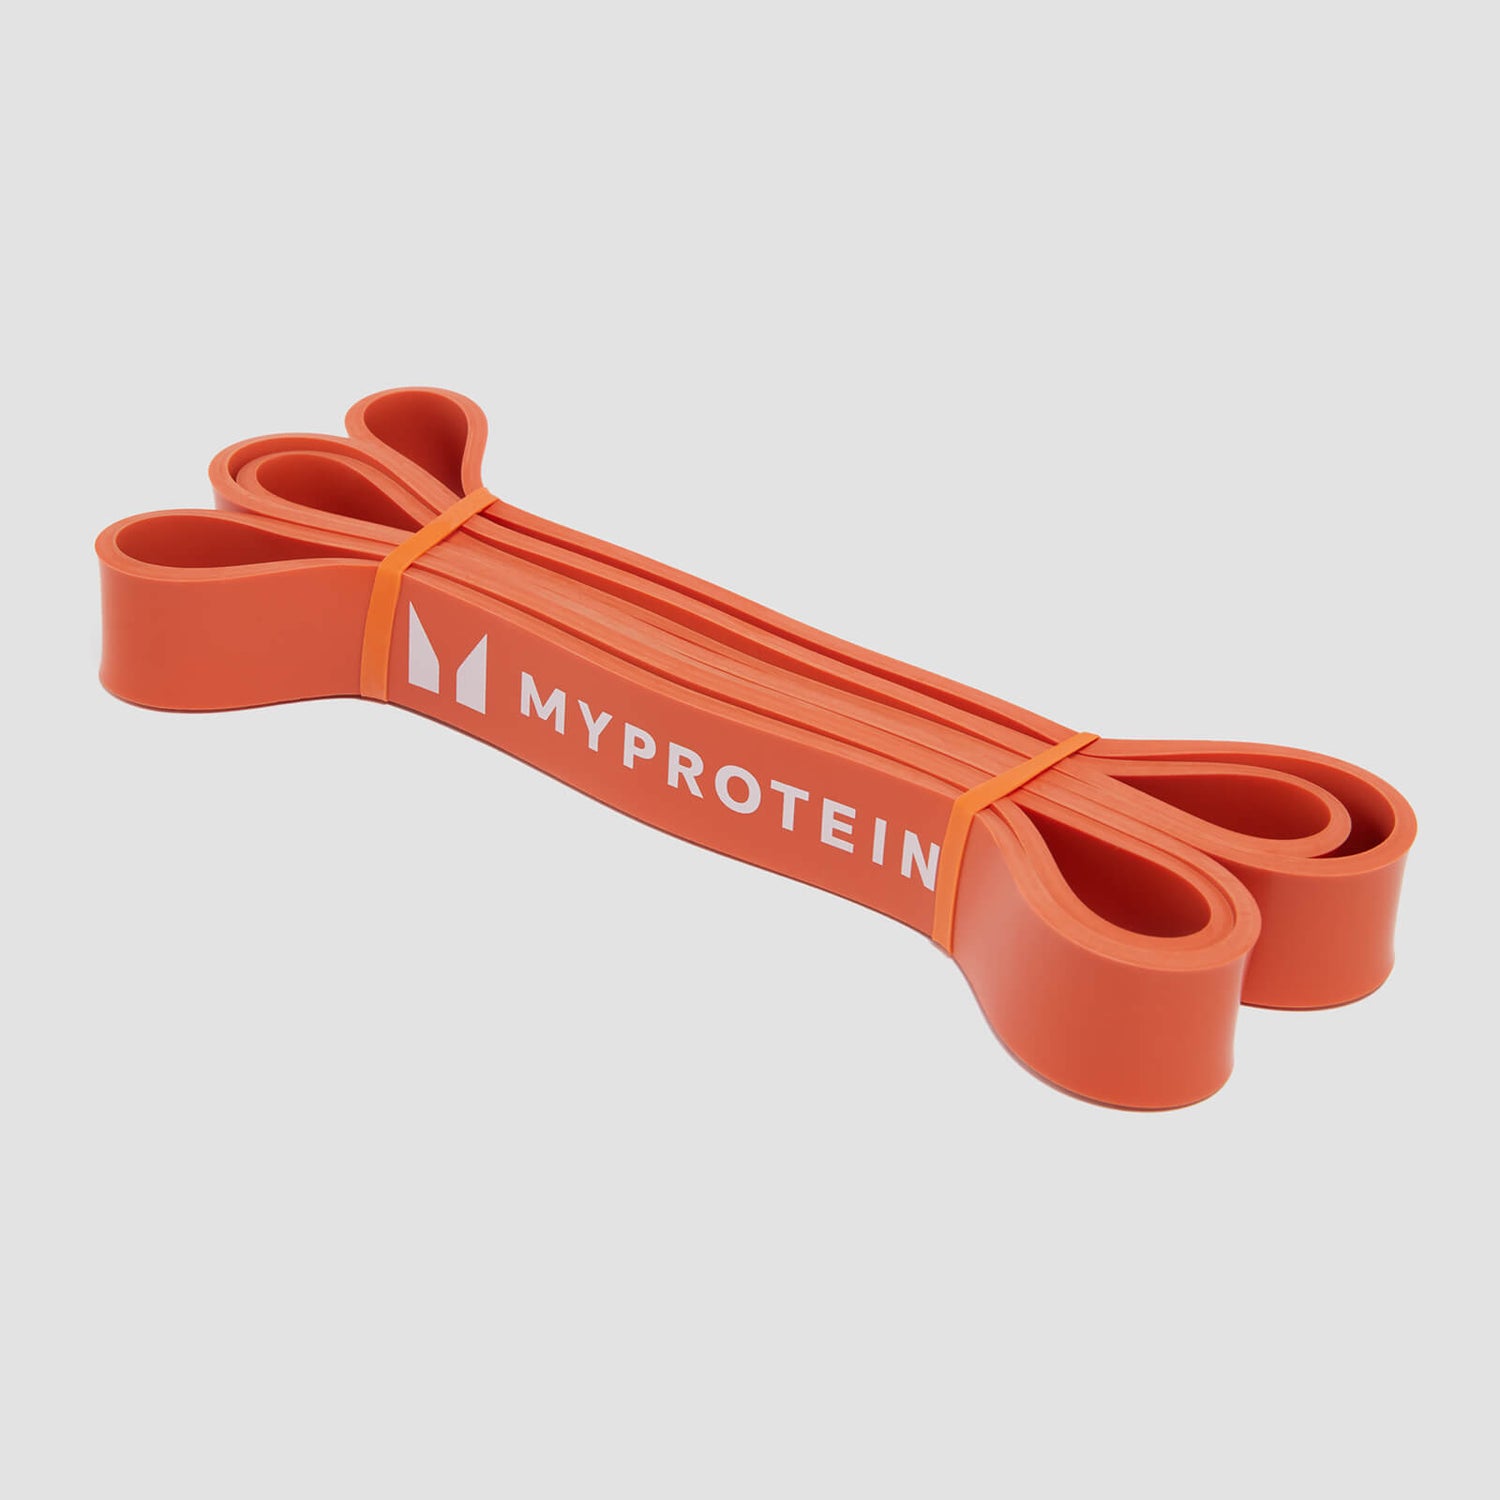 Bande di resistenza Myprotein - Banda singola (11-36kg) - Arancione scuro